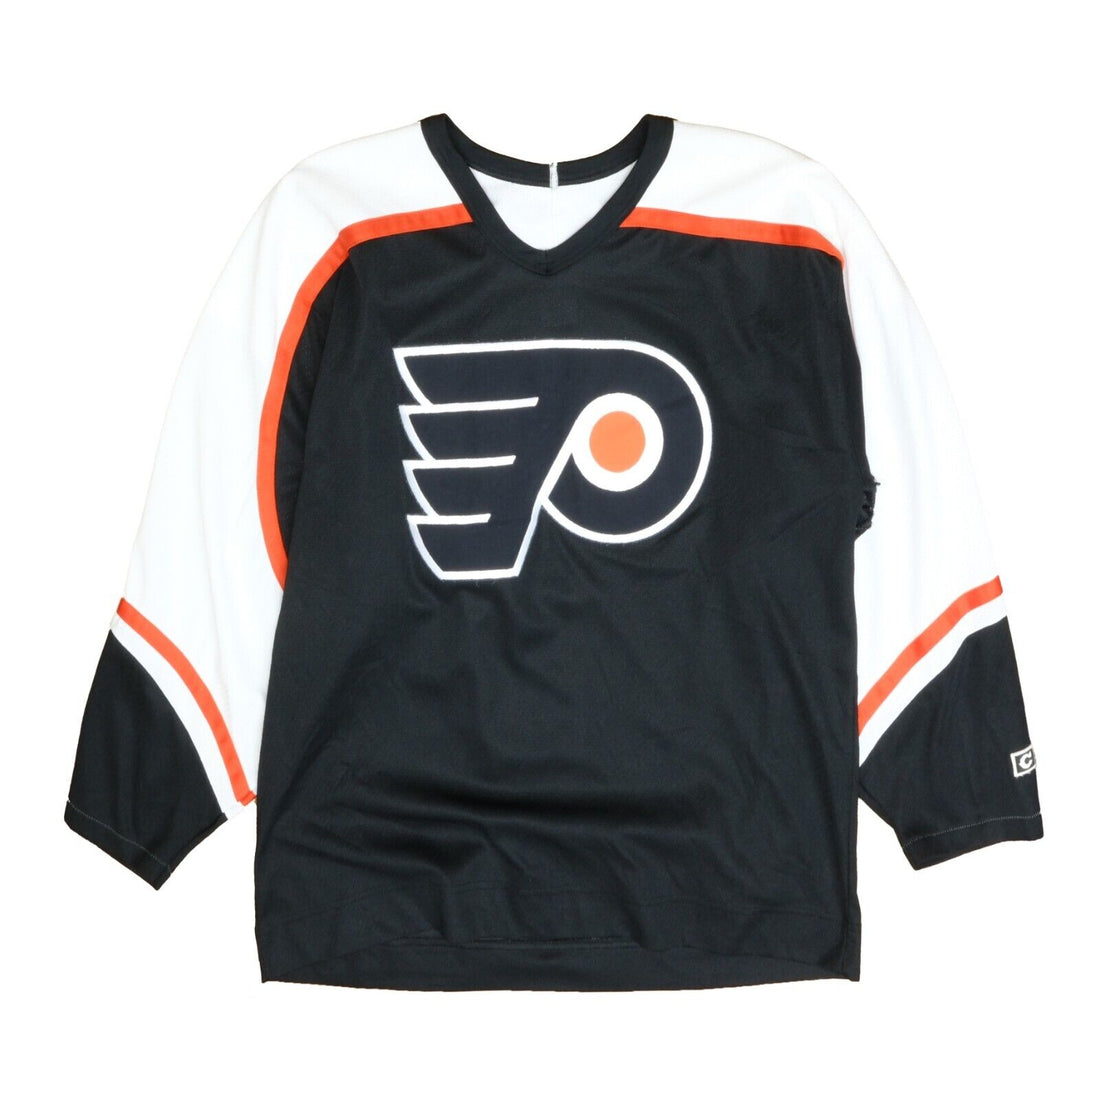 Philadelphia Flyers Throwback Jerseys, Vintage NHL Gear